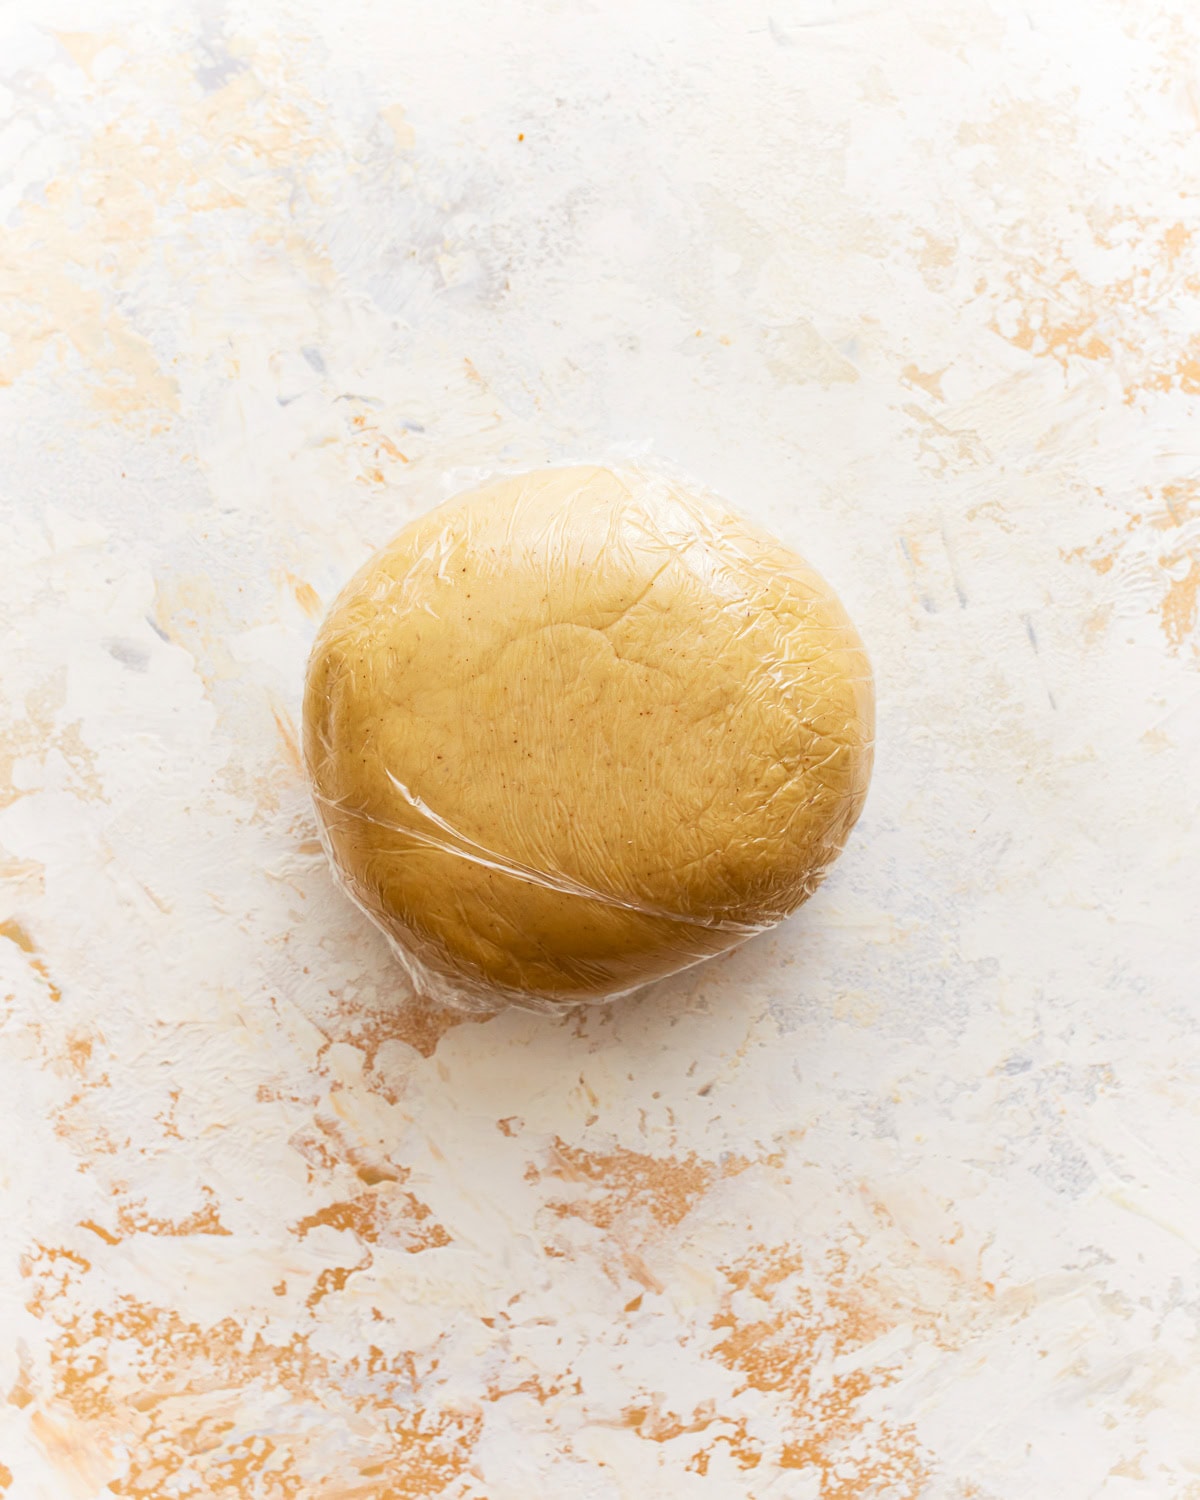 wrapped gluten-free pasta dough ball.